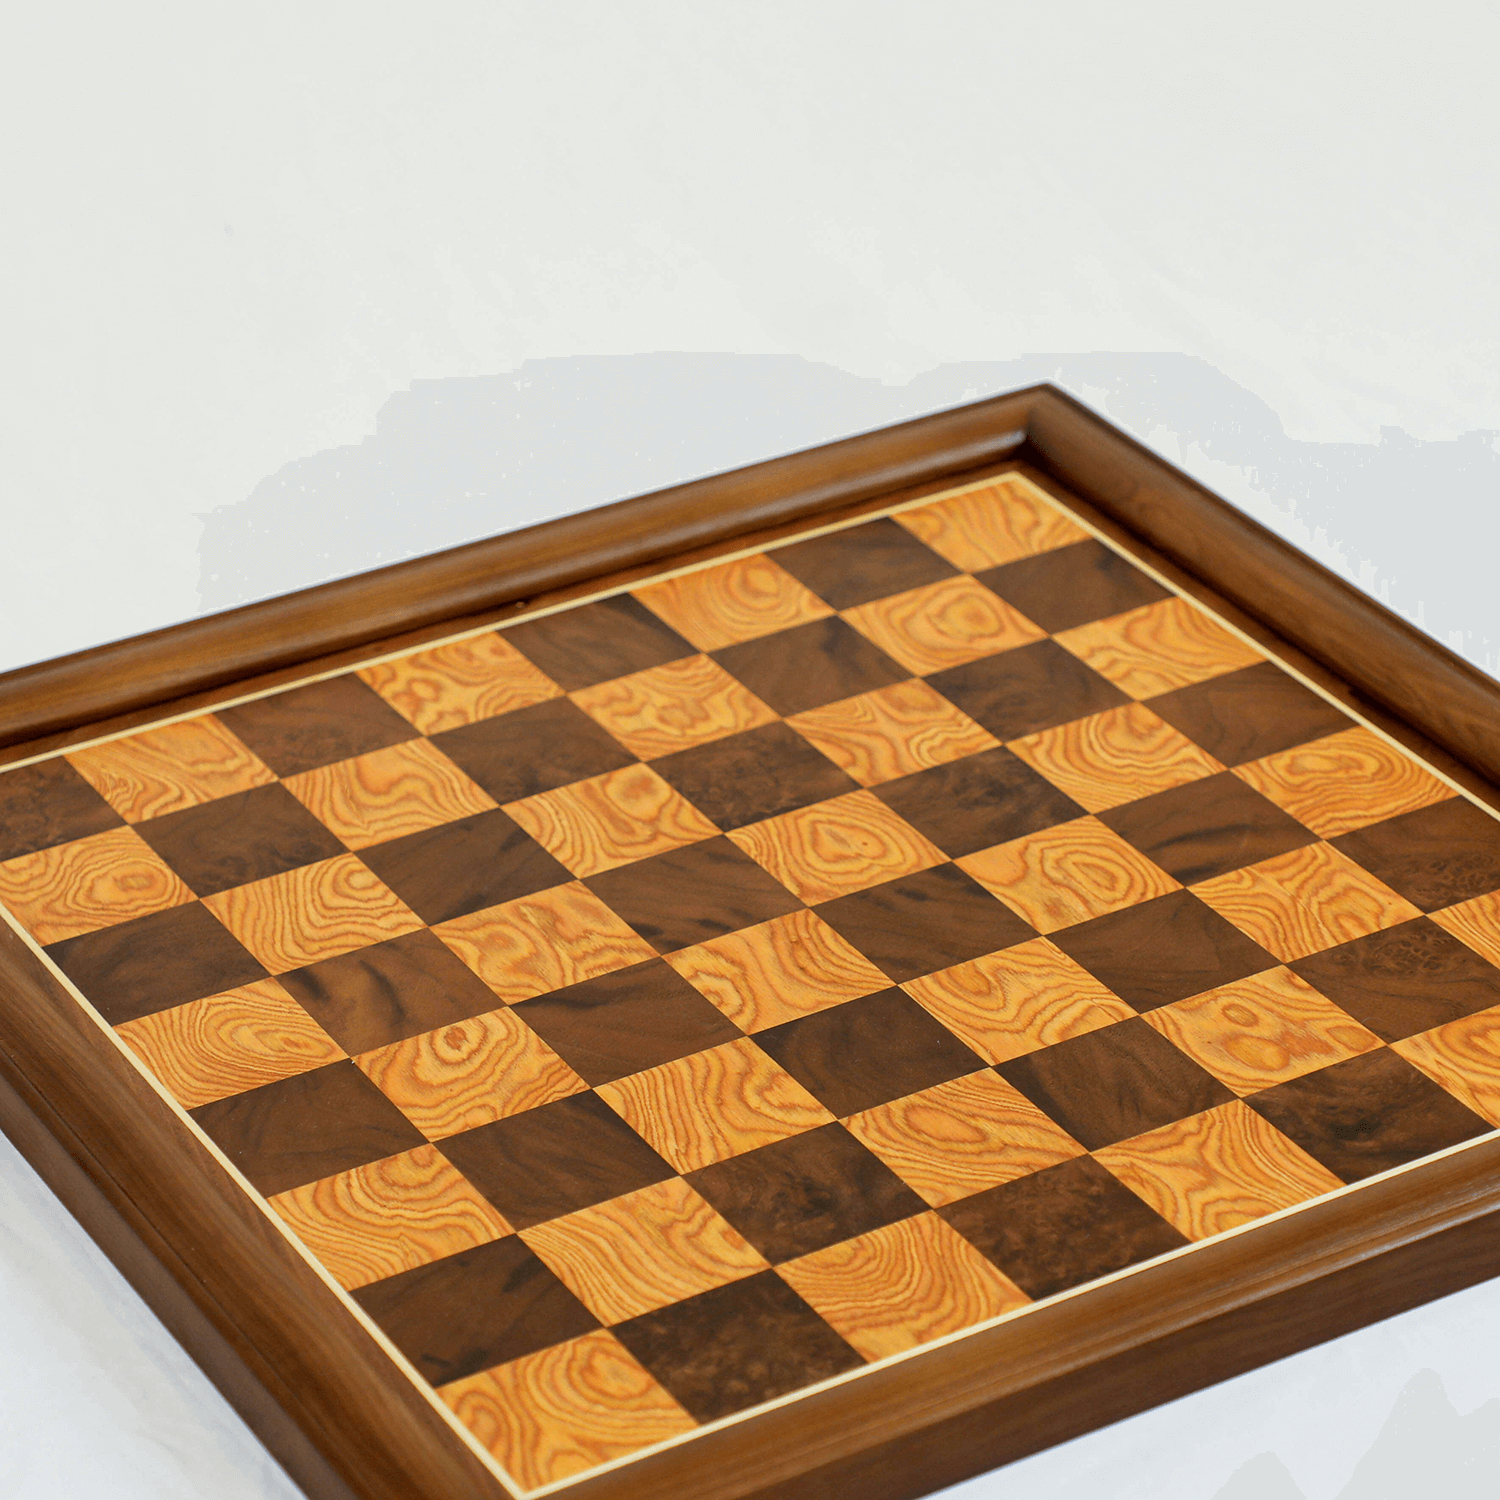 Mixed Walnut & Cherry Wooden Chess Board